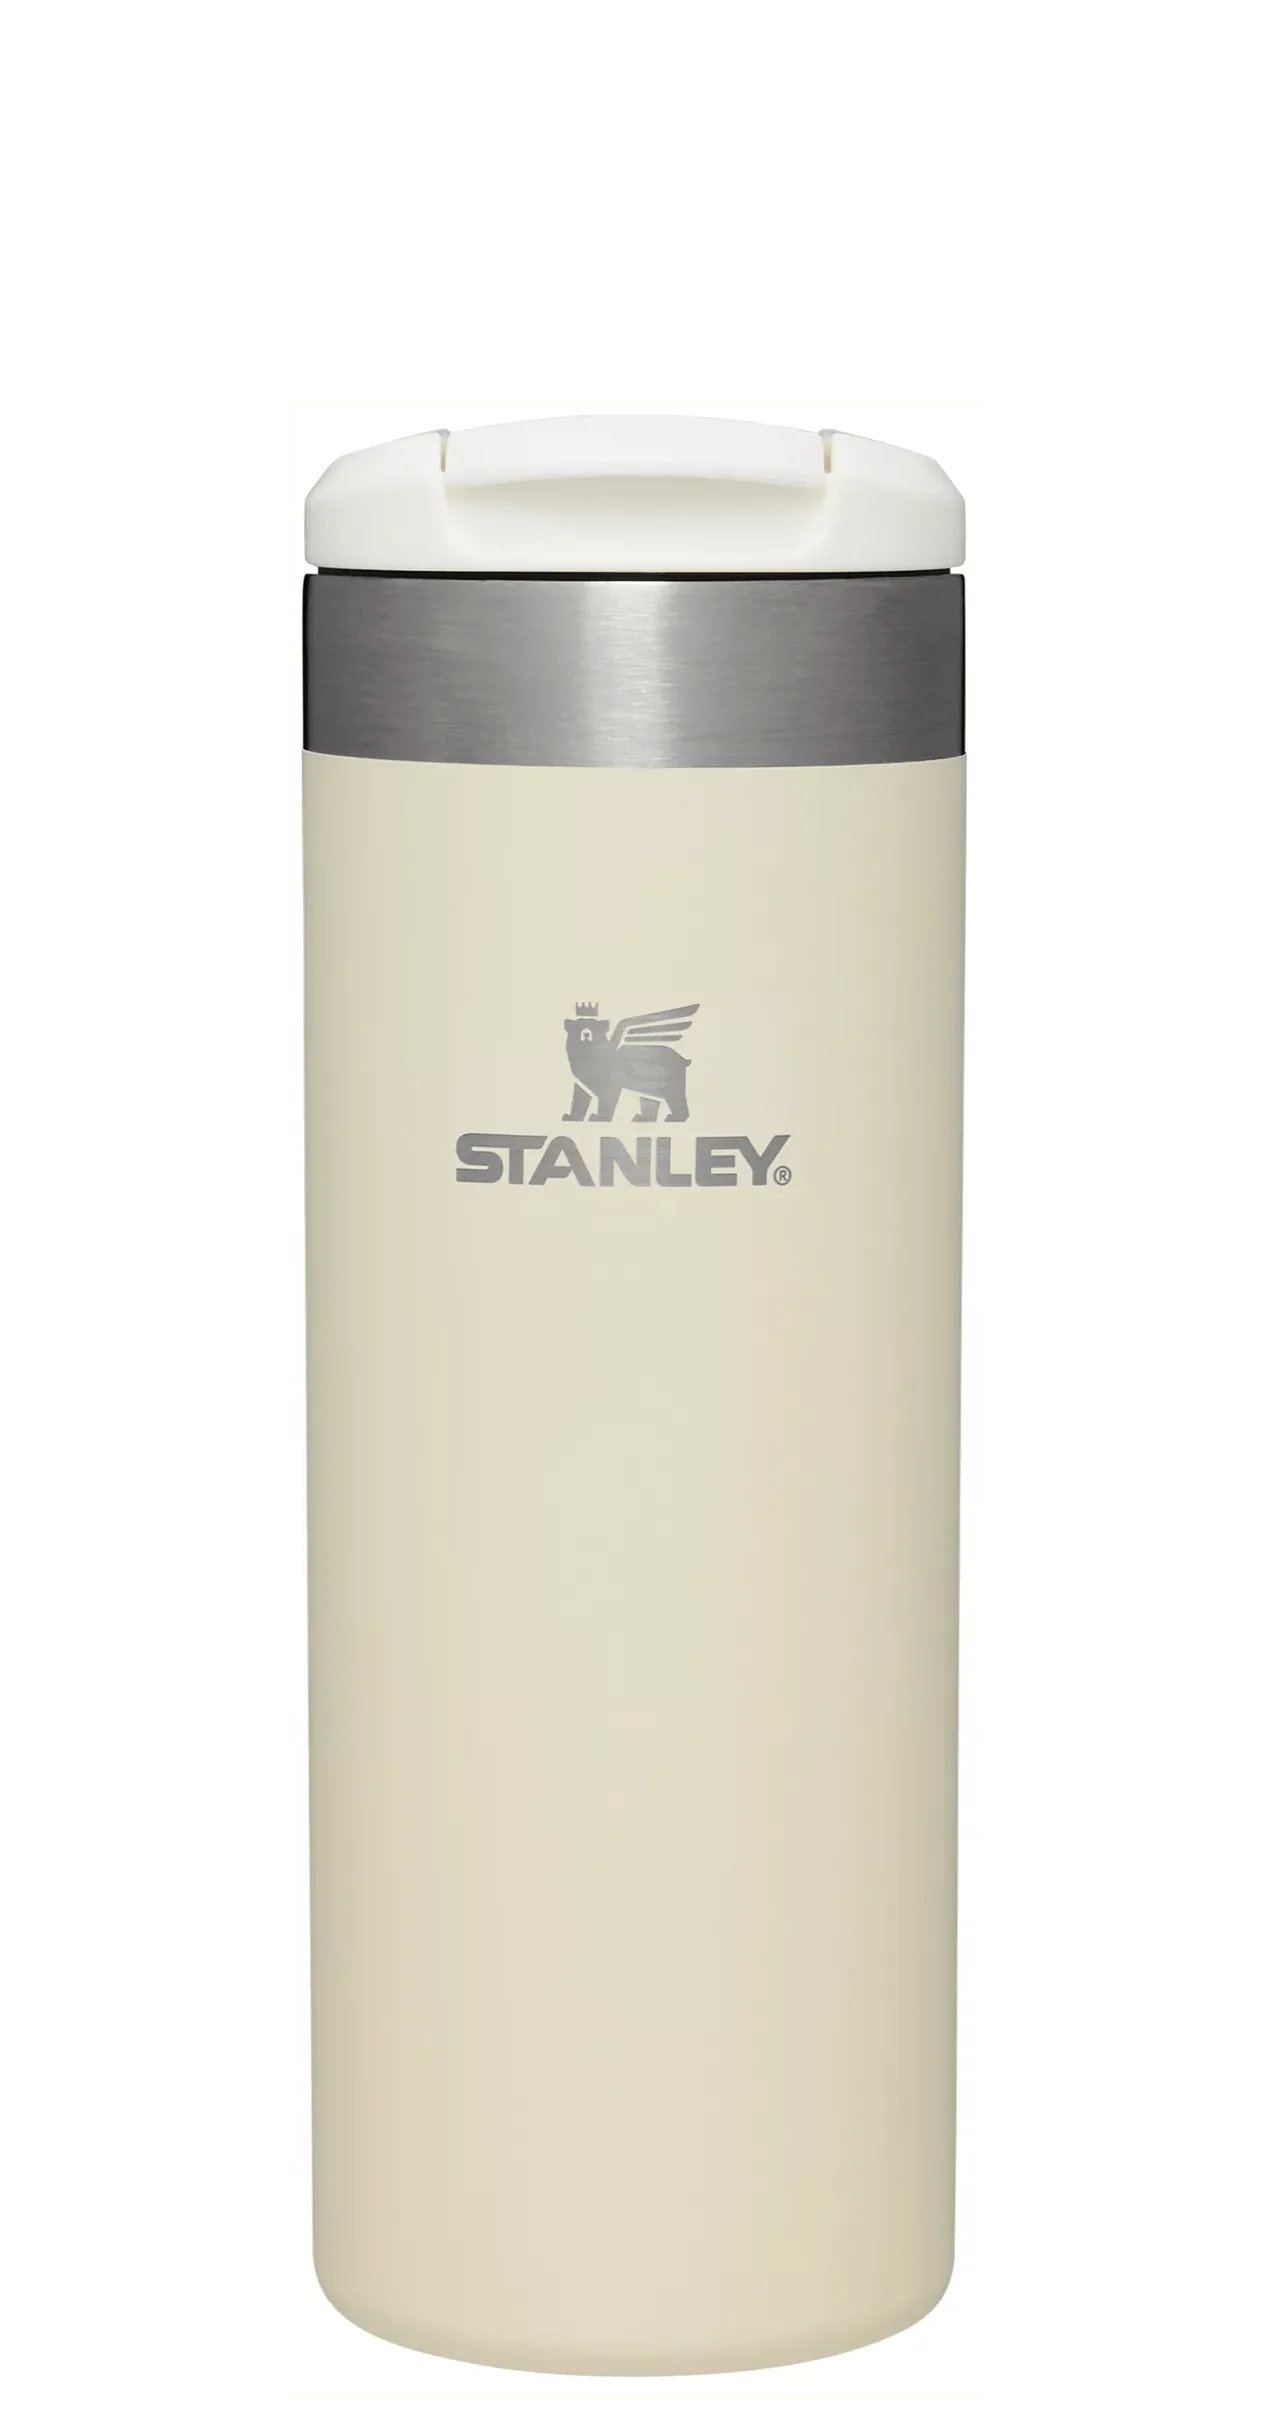 Stanley AeroLight Transit Bottle 20 Oz Vacuum Insulated Tumbler